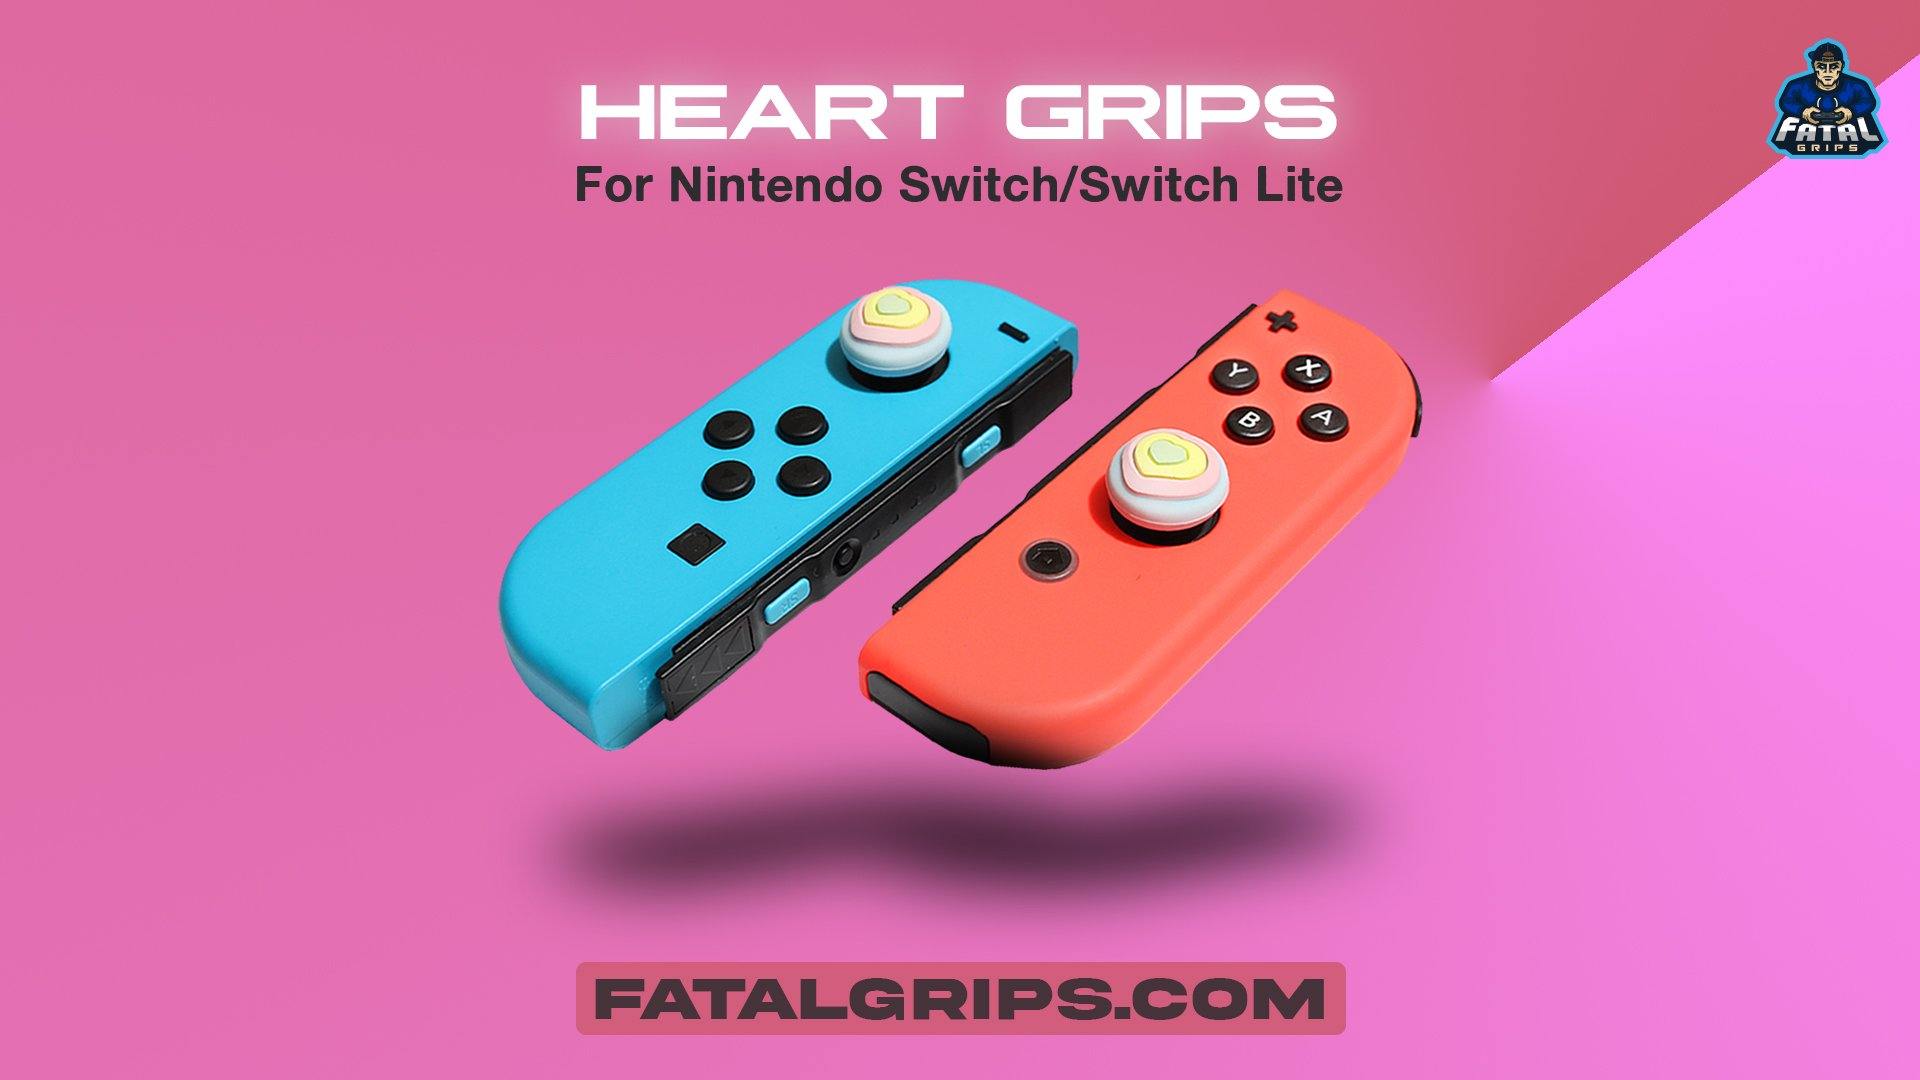 Heart Grips - Fatal Grips